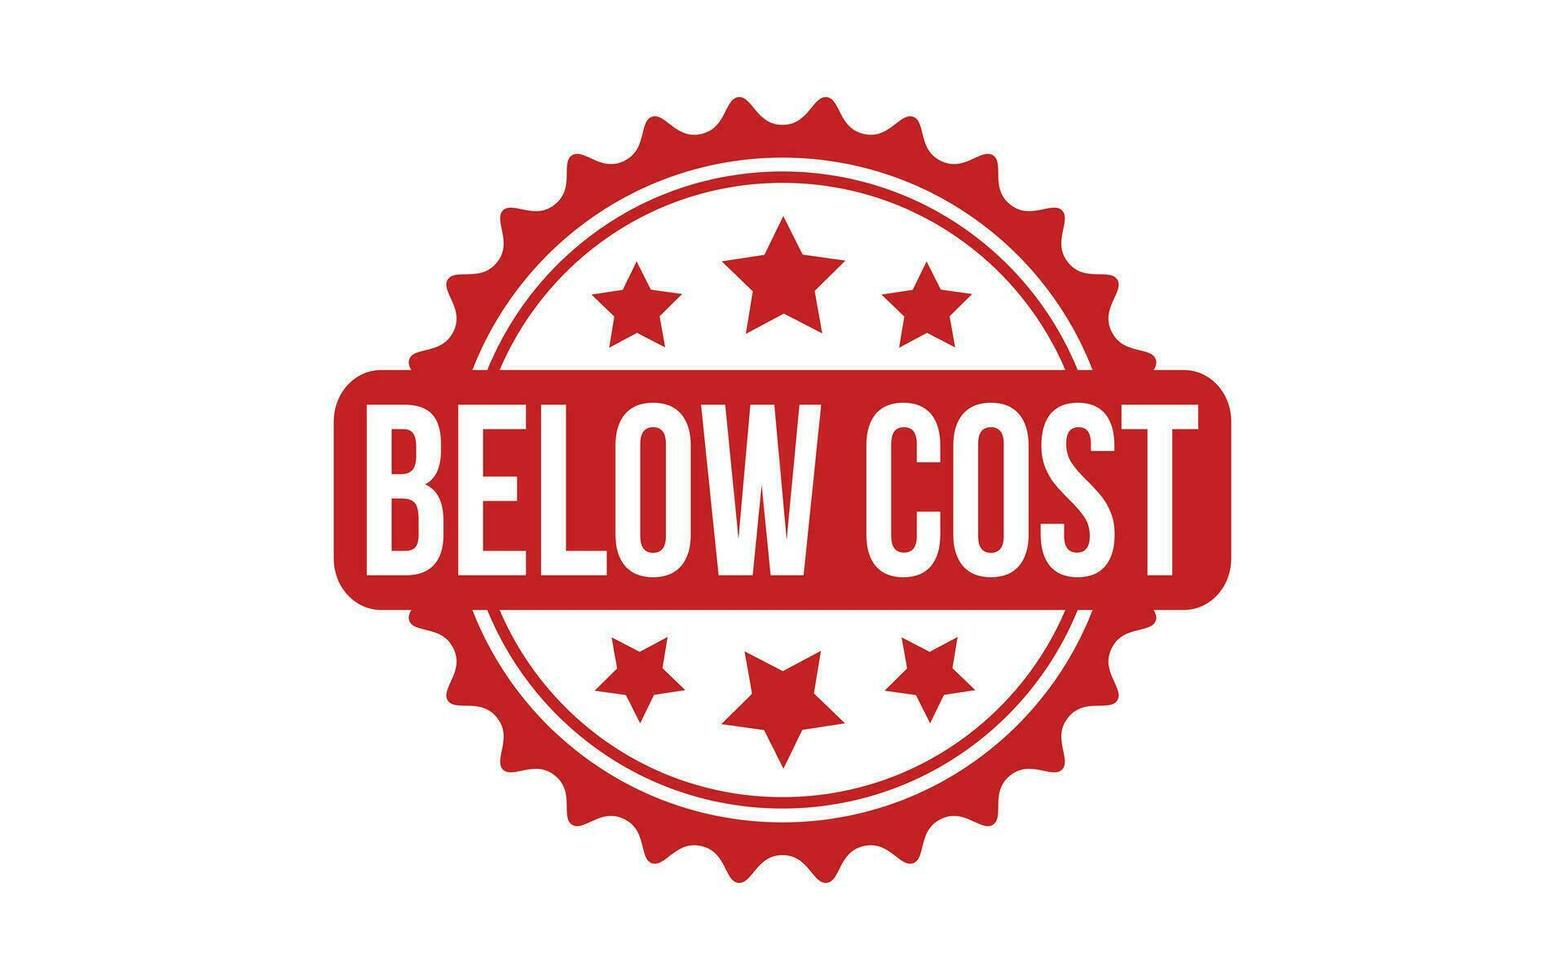 Below Cost rubber grunge stamp seal vector